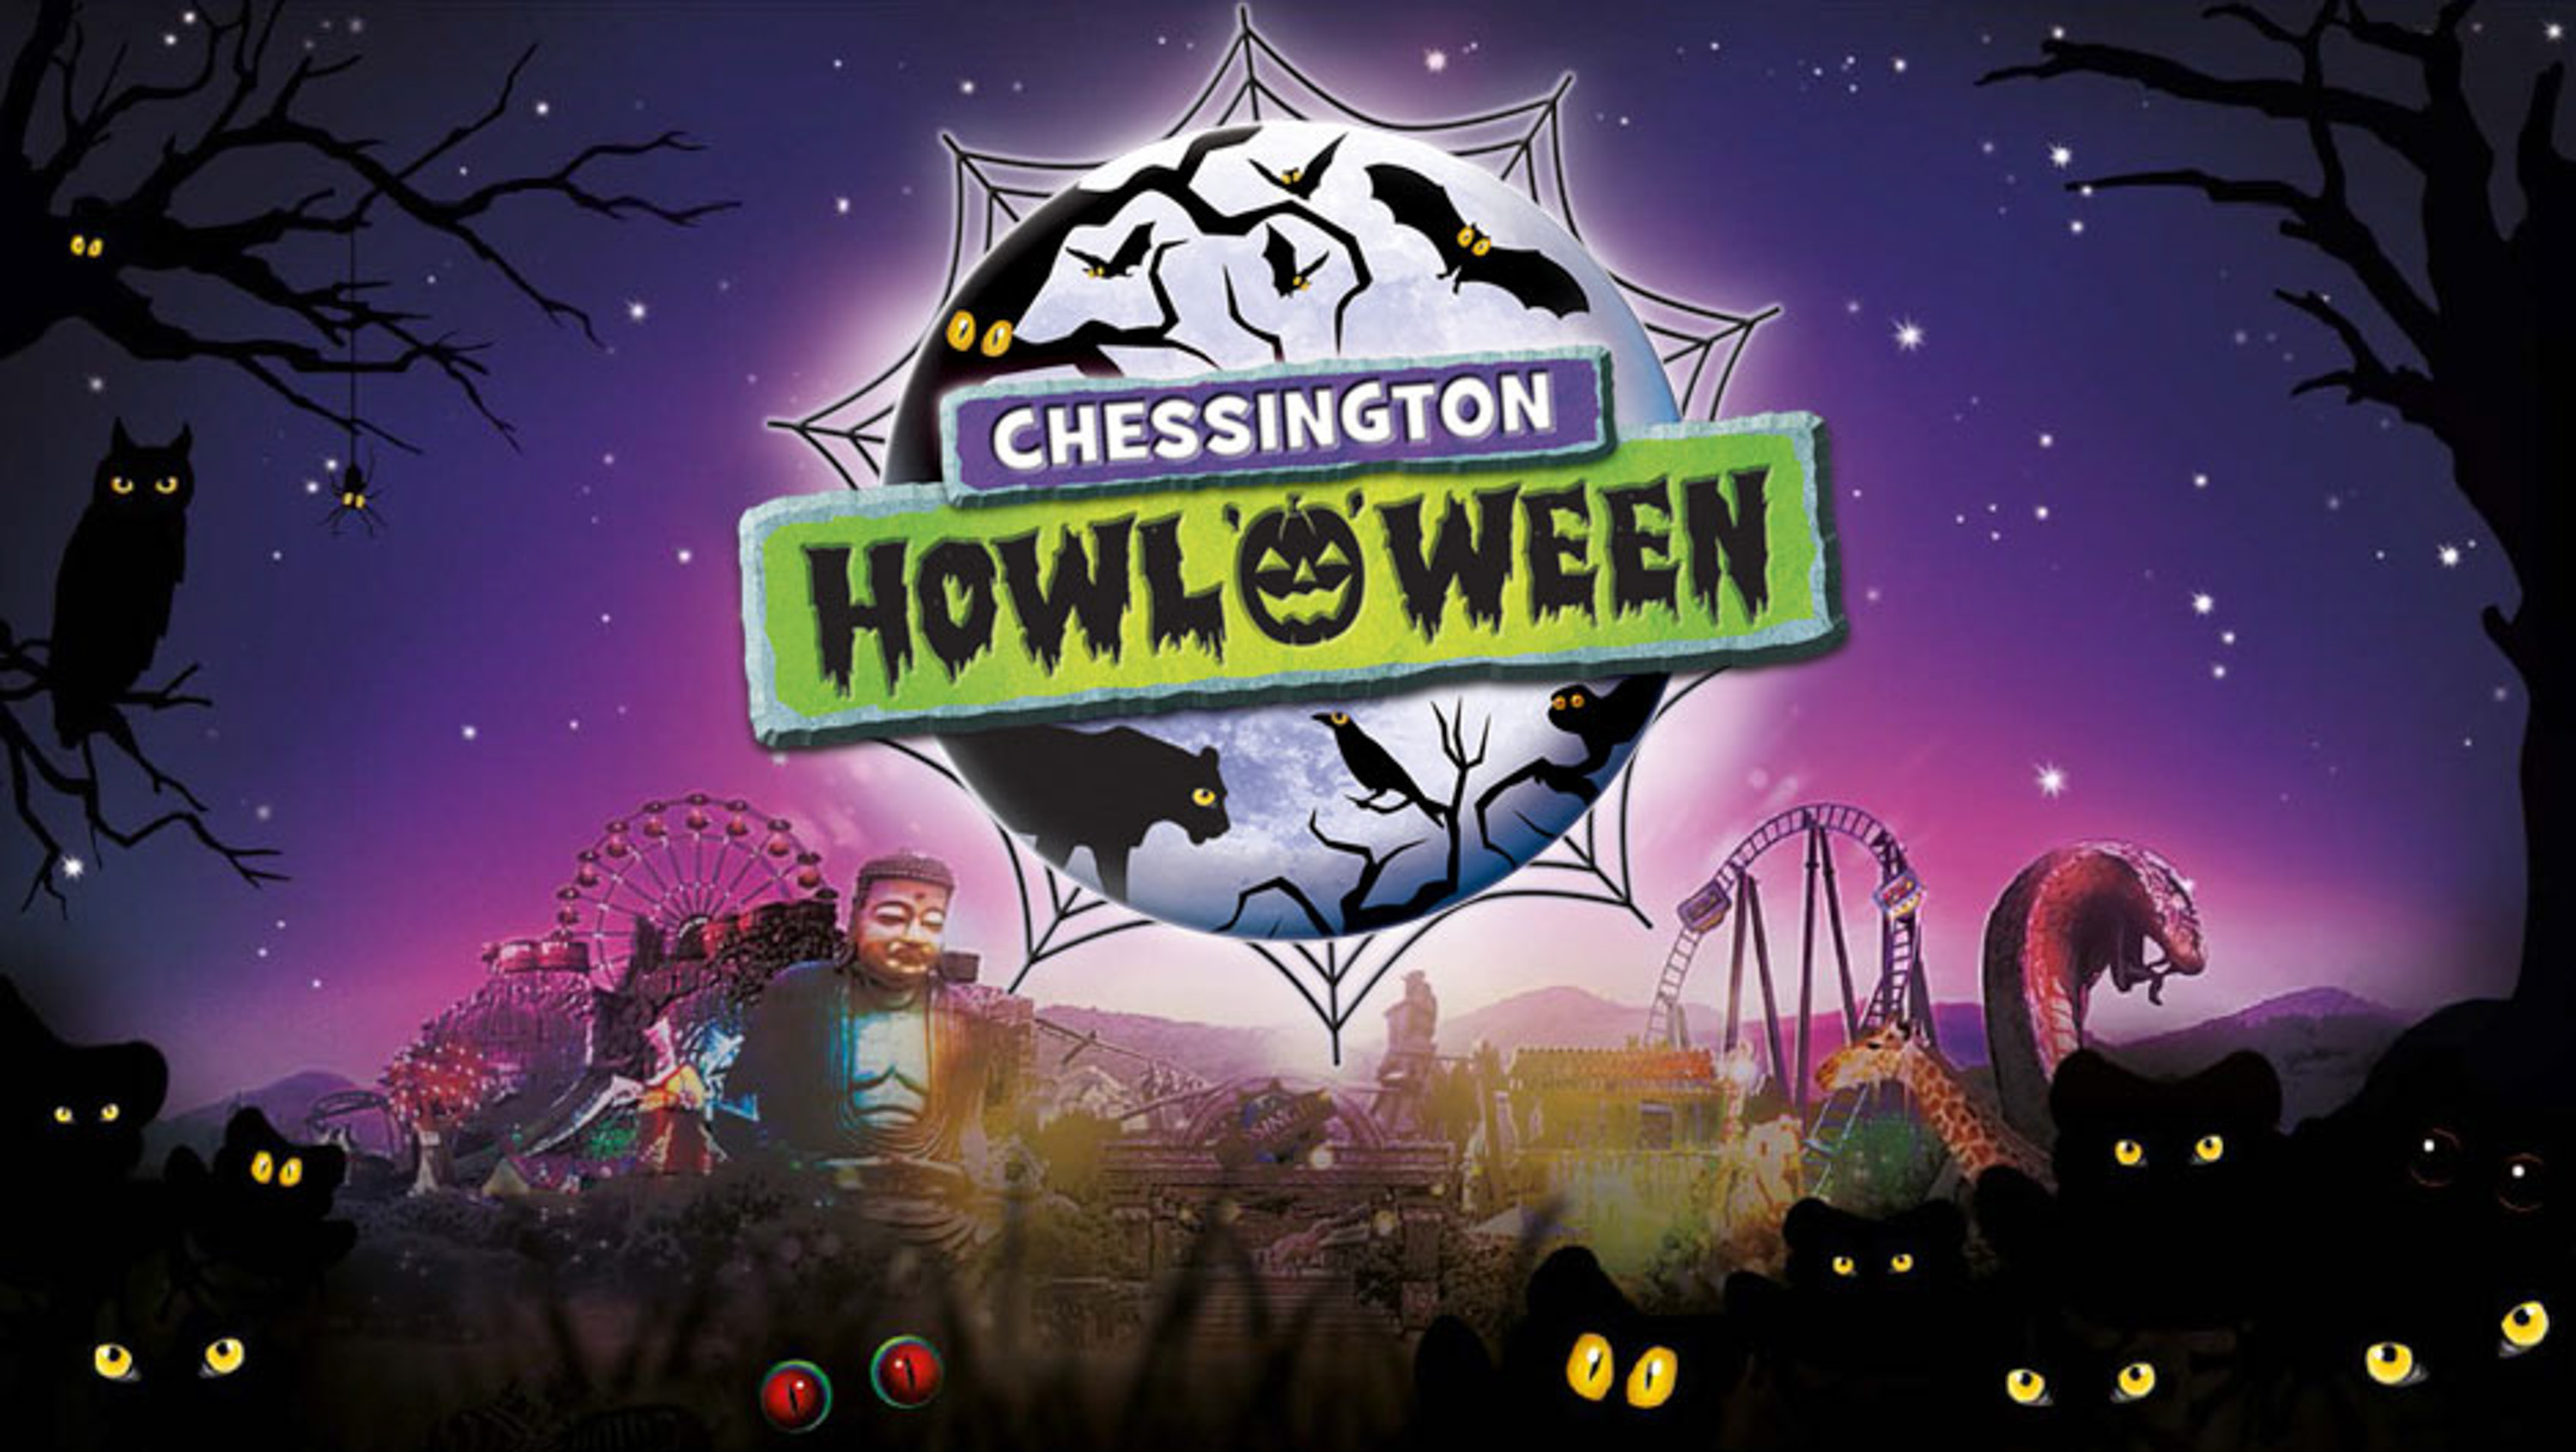 "Howloween" to replace hocus pocus